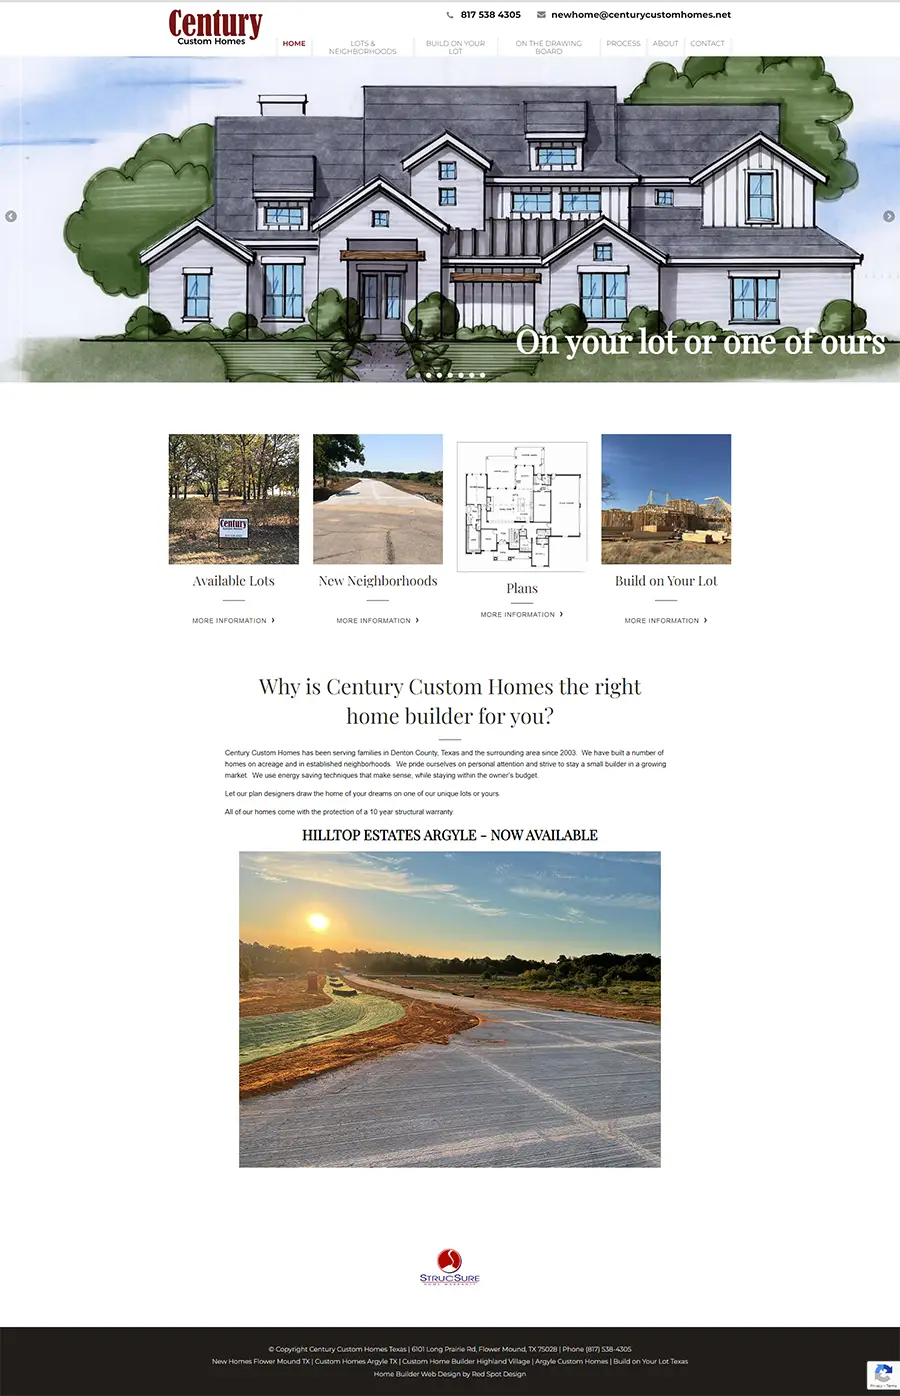 home builder web design for century custom homes AFTER